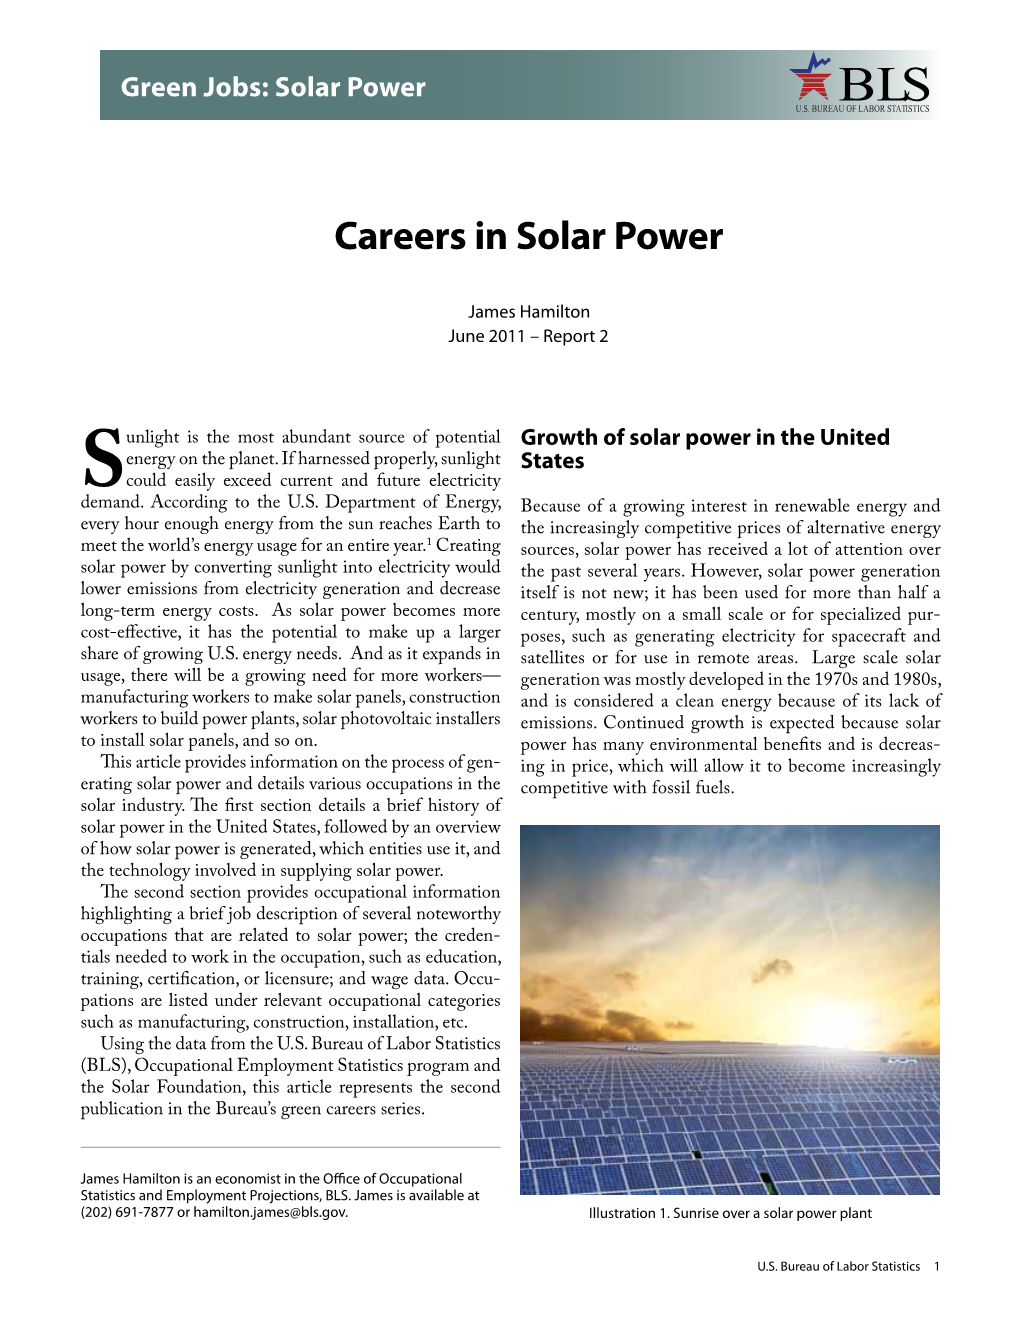 Green Jobs: Solar Power U.S